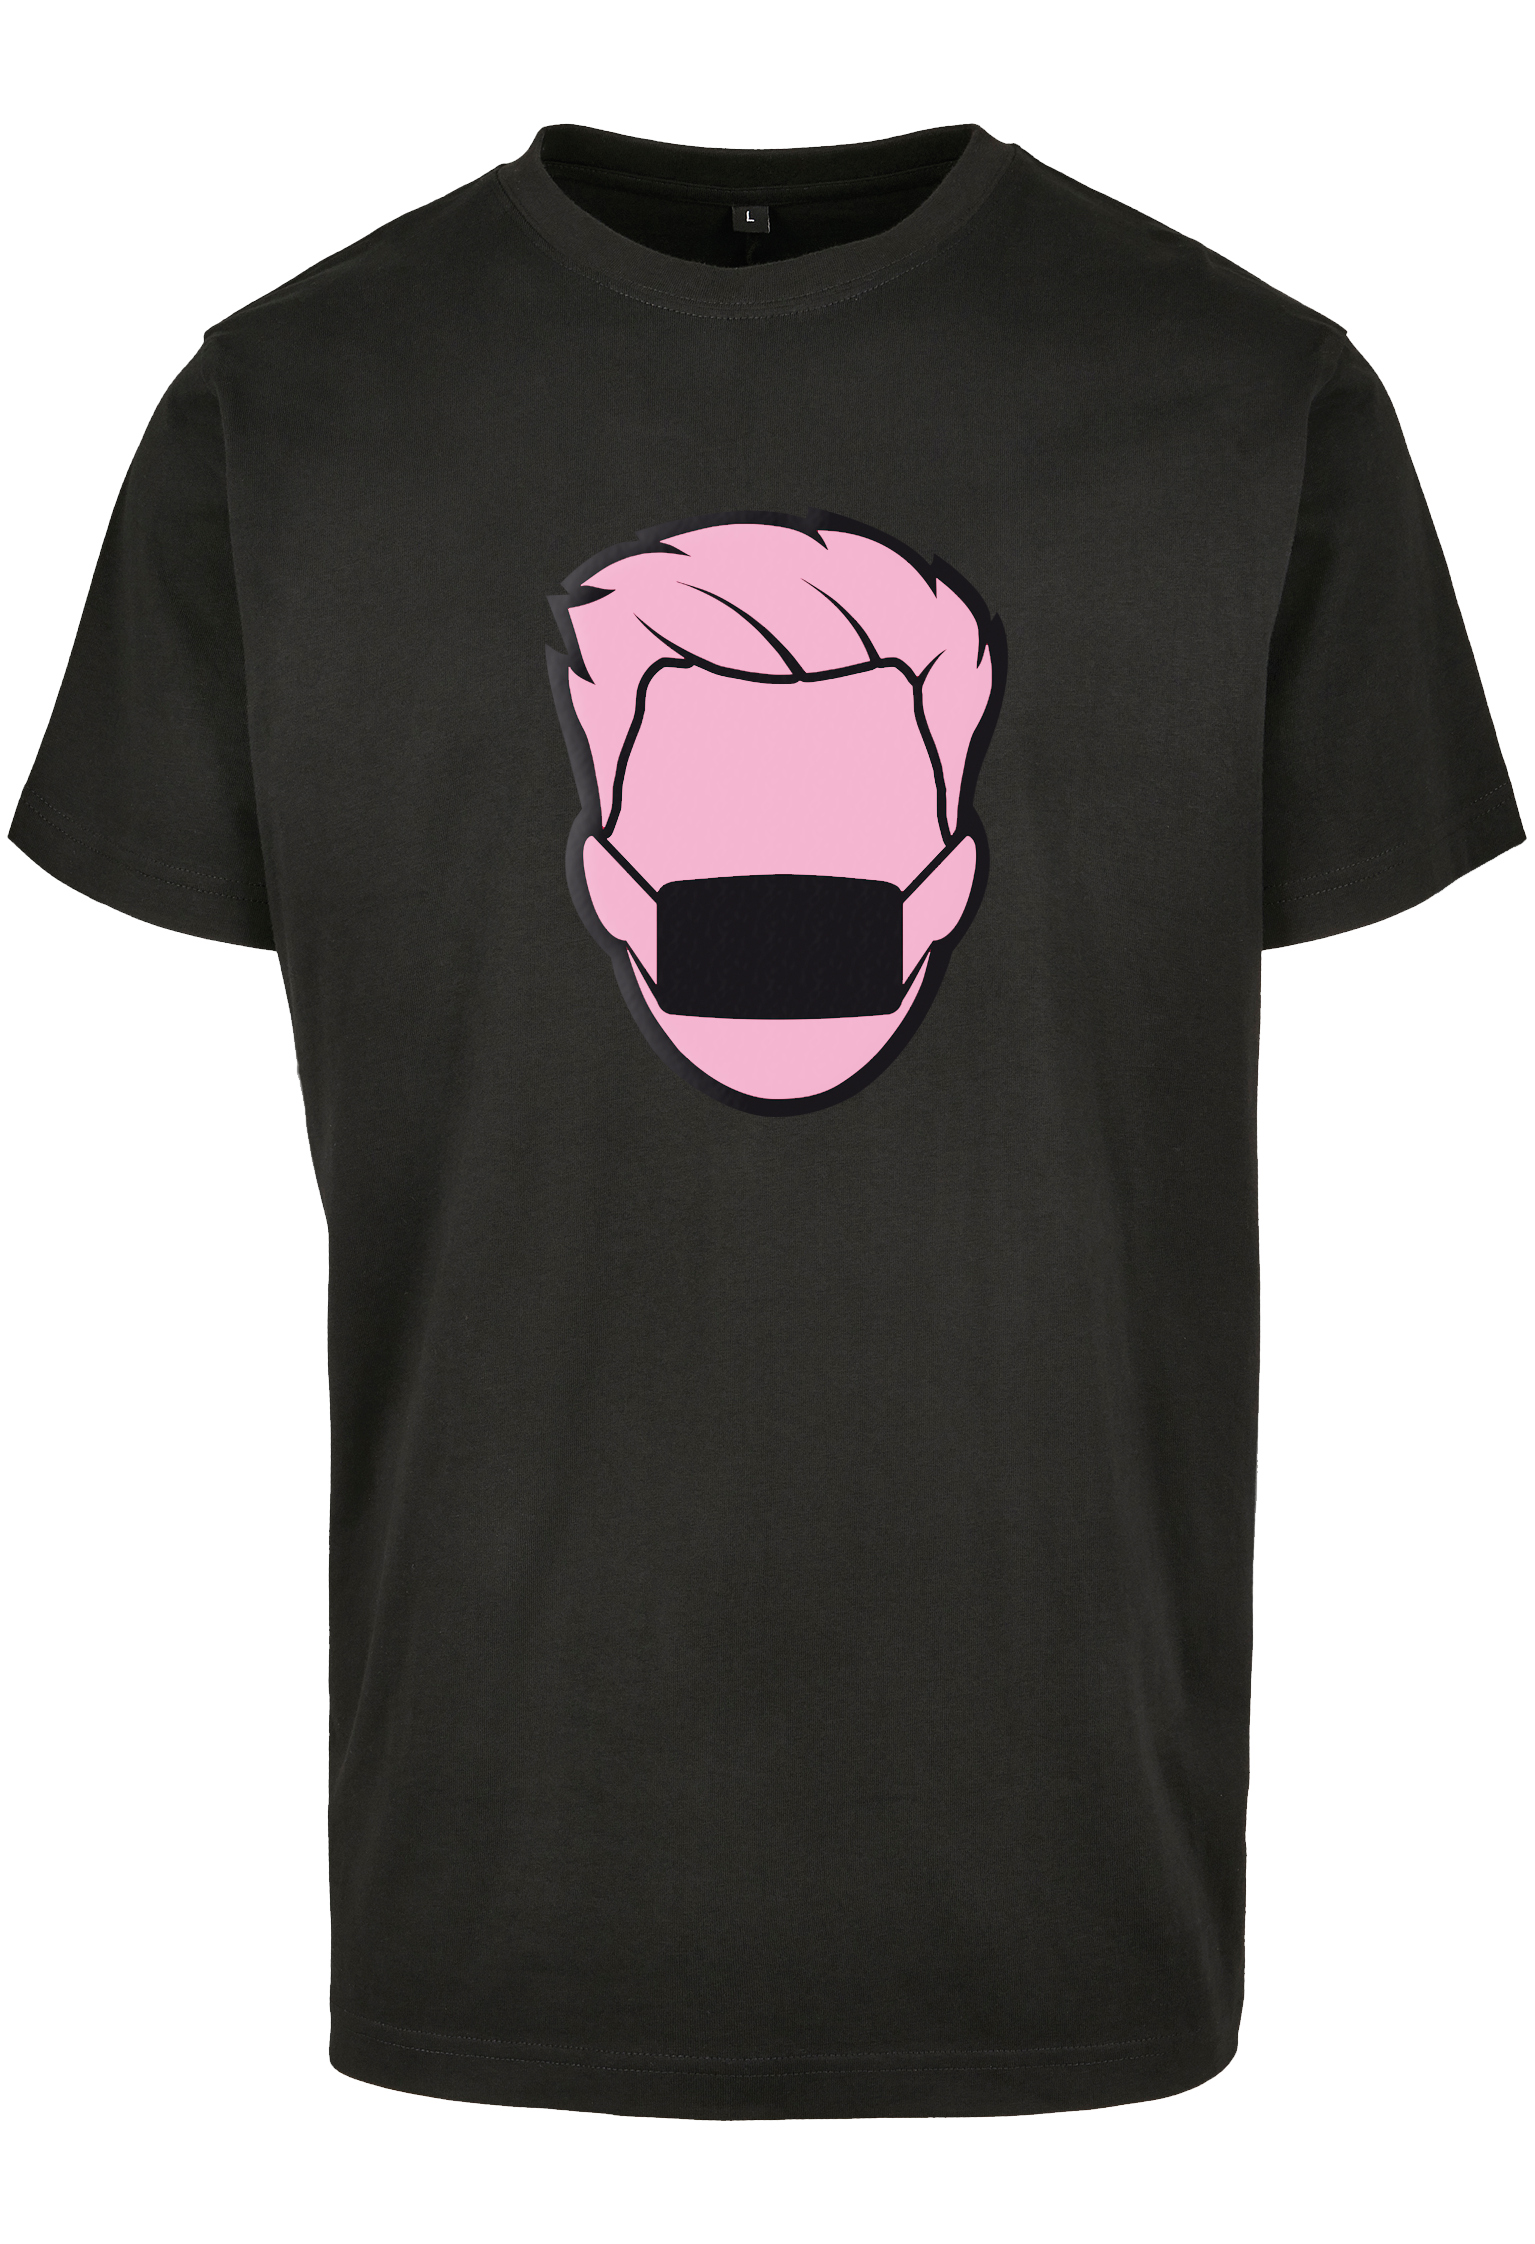 Pinkpote black T-Shirt